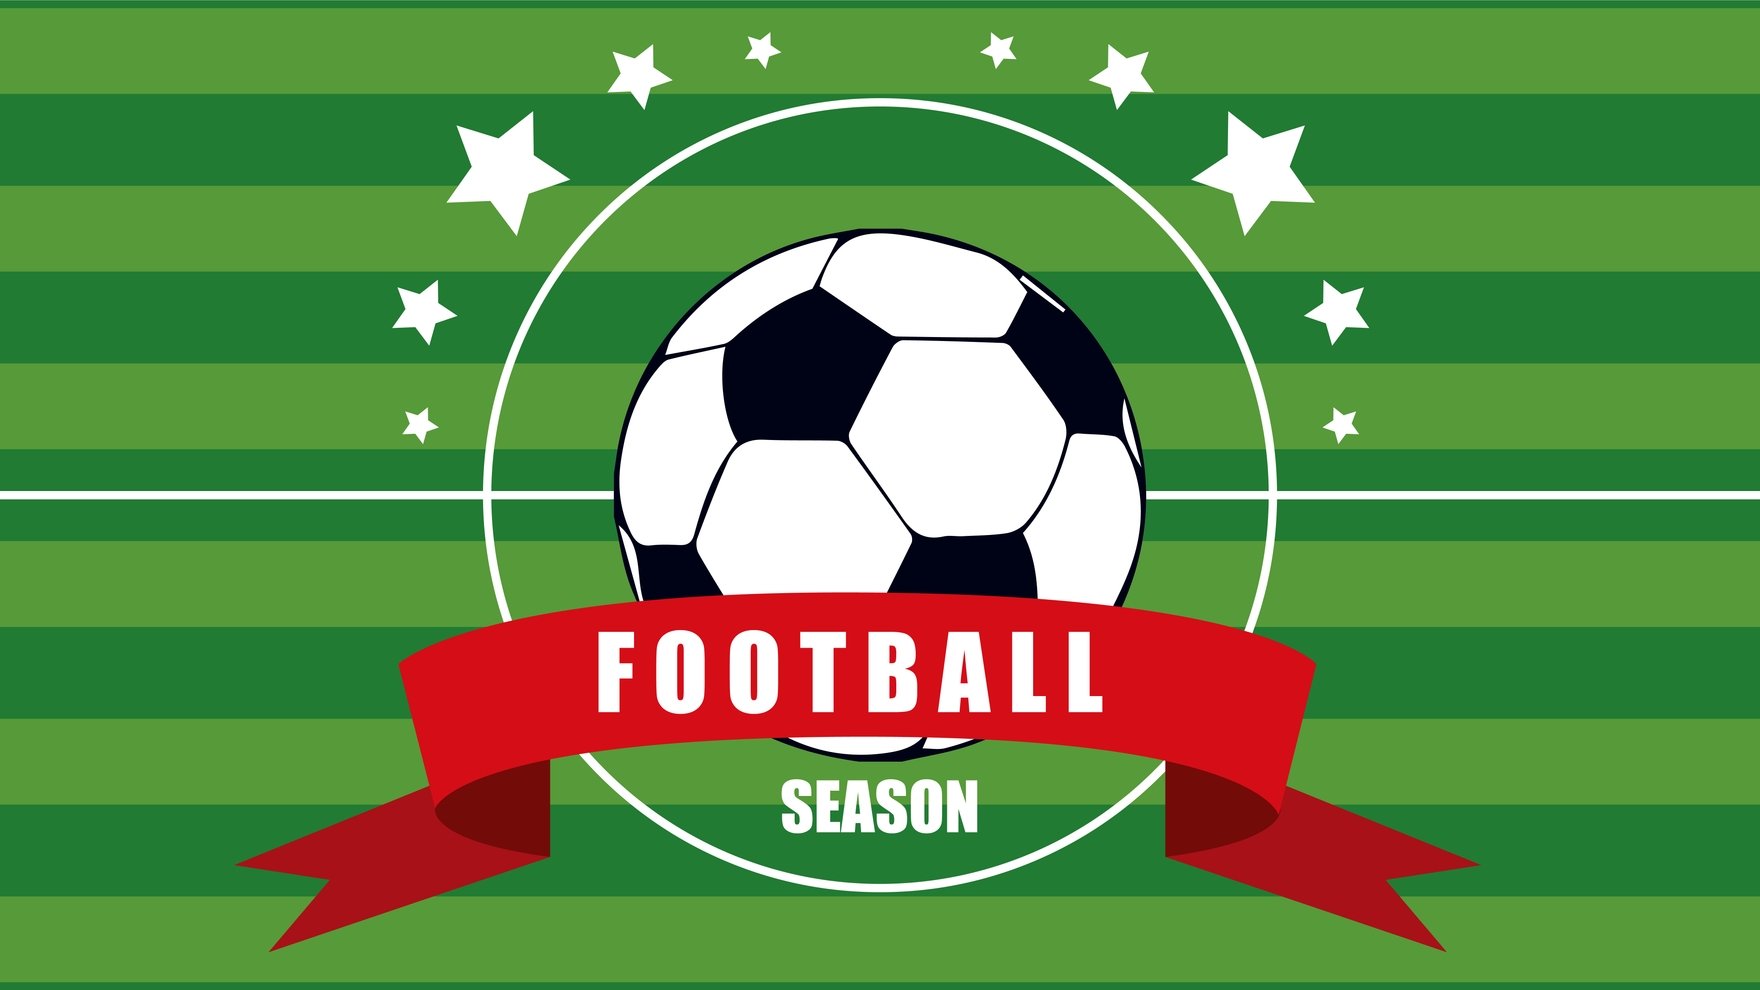 Free Football Season Background in Illustrator, EPS, SVG, JPG, PNG